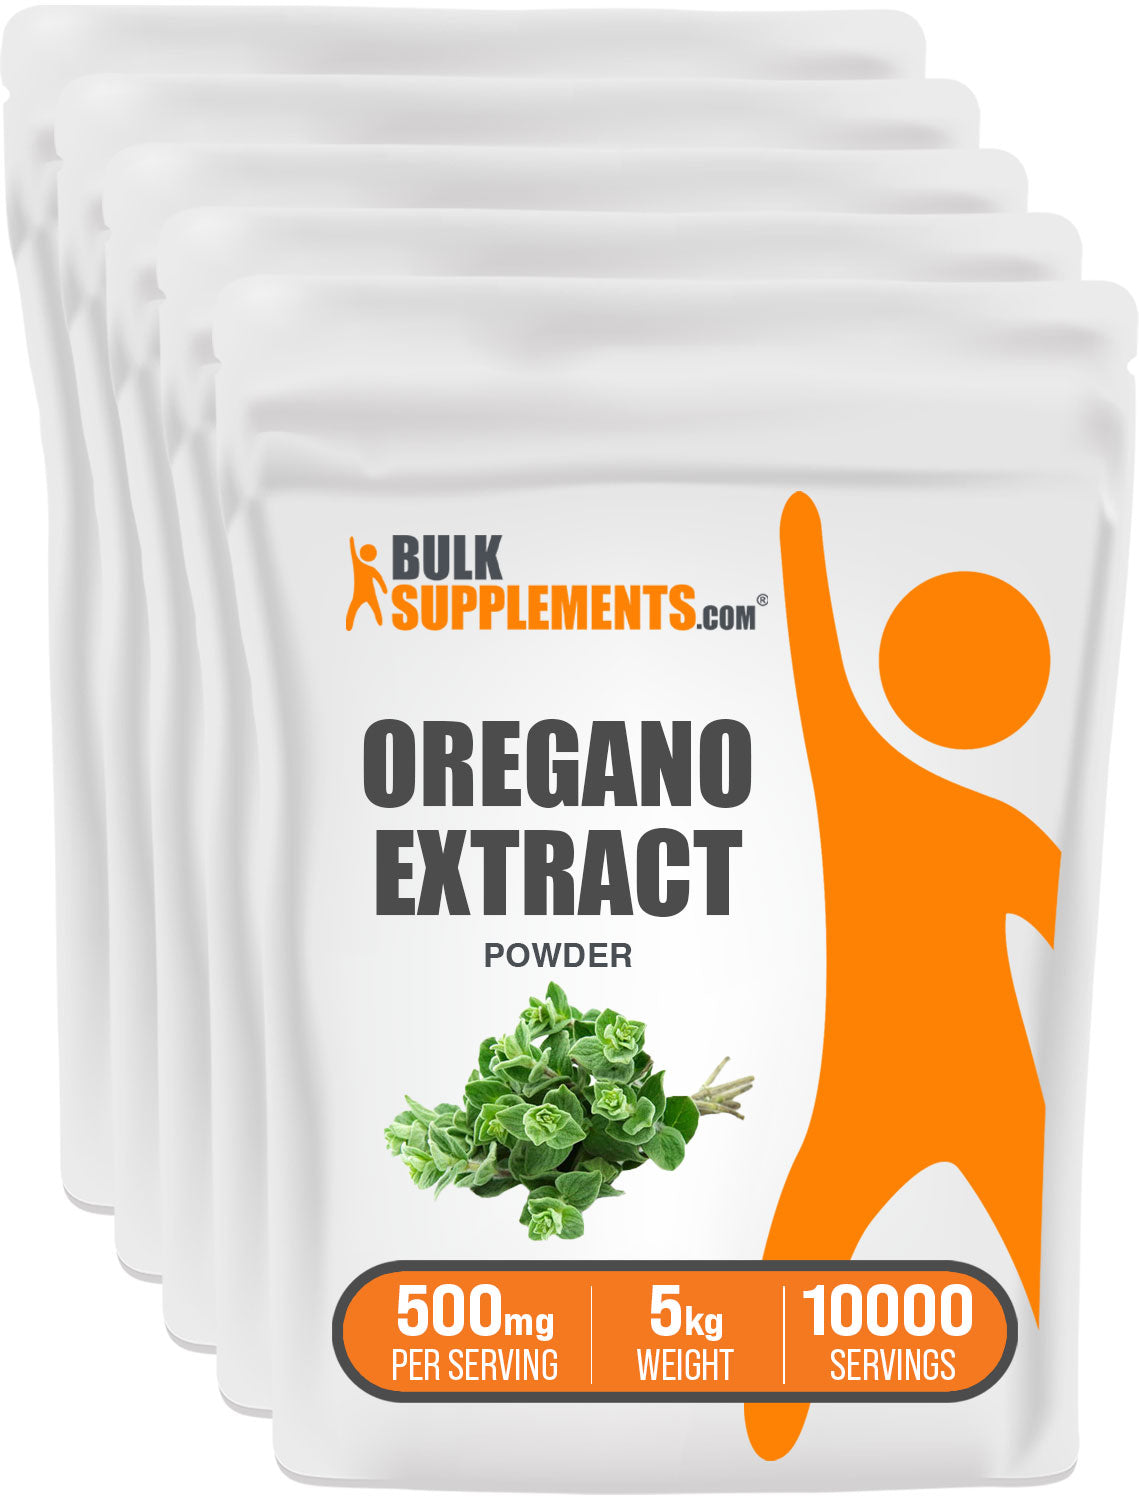 BulkSupplements Oregano Extract Powder 5kg bag